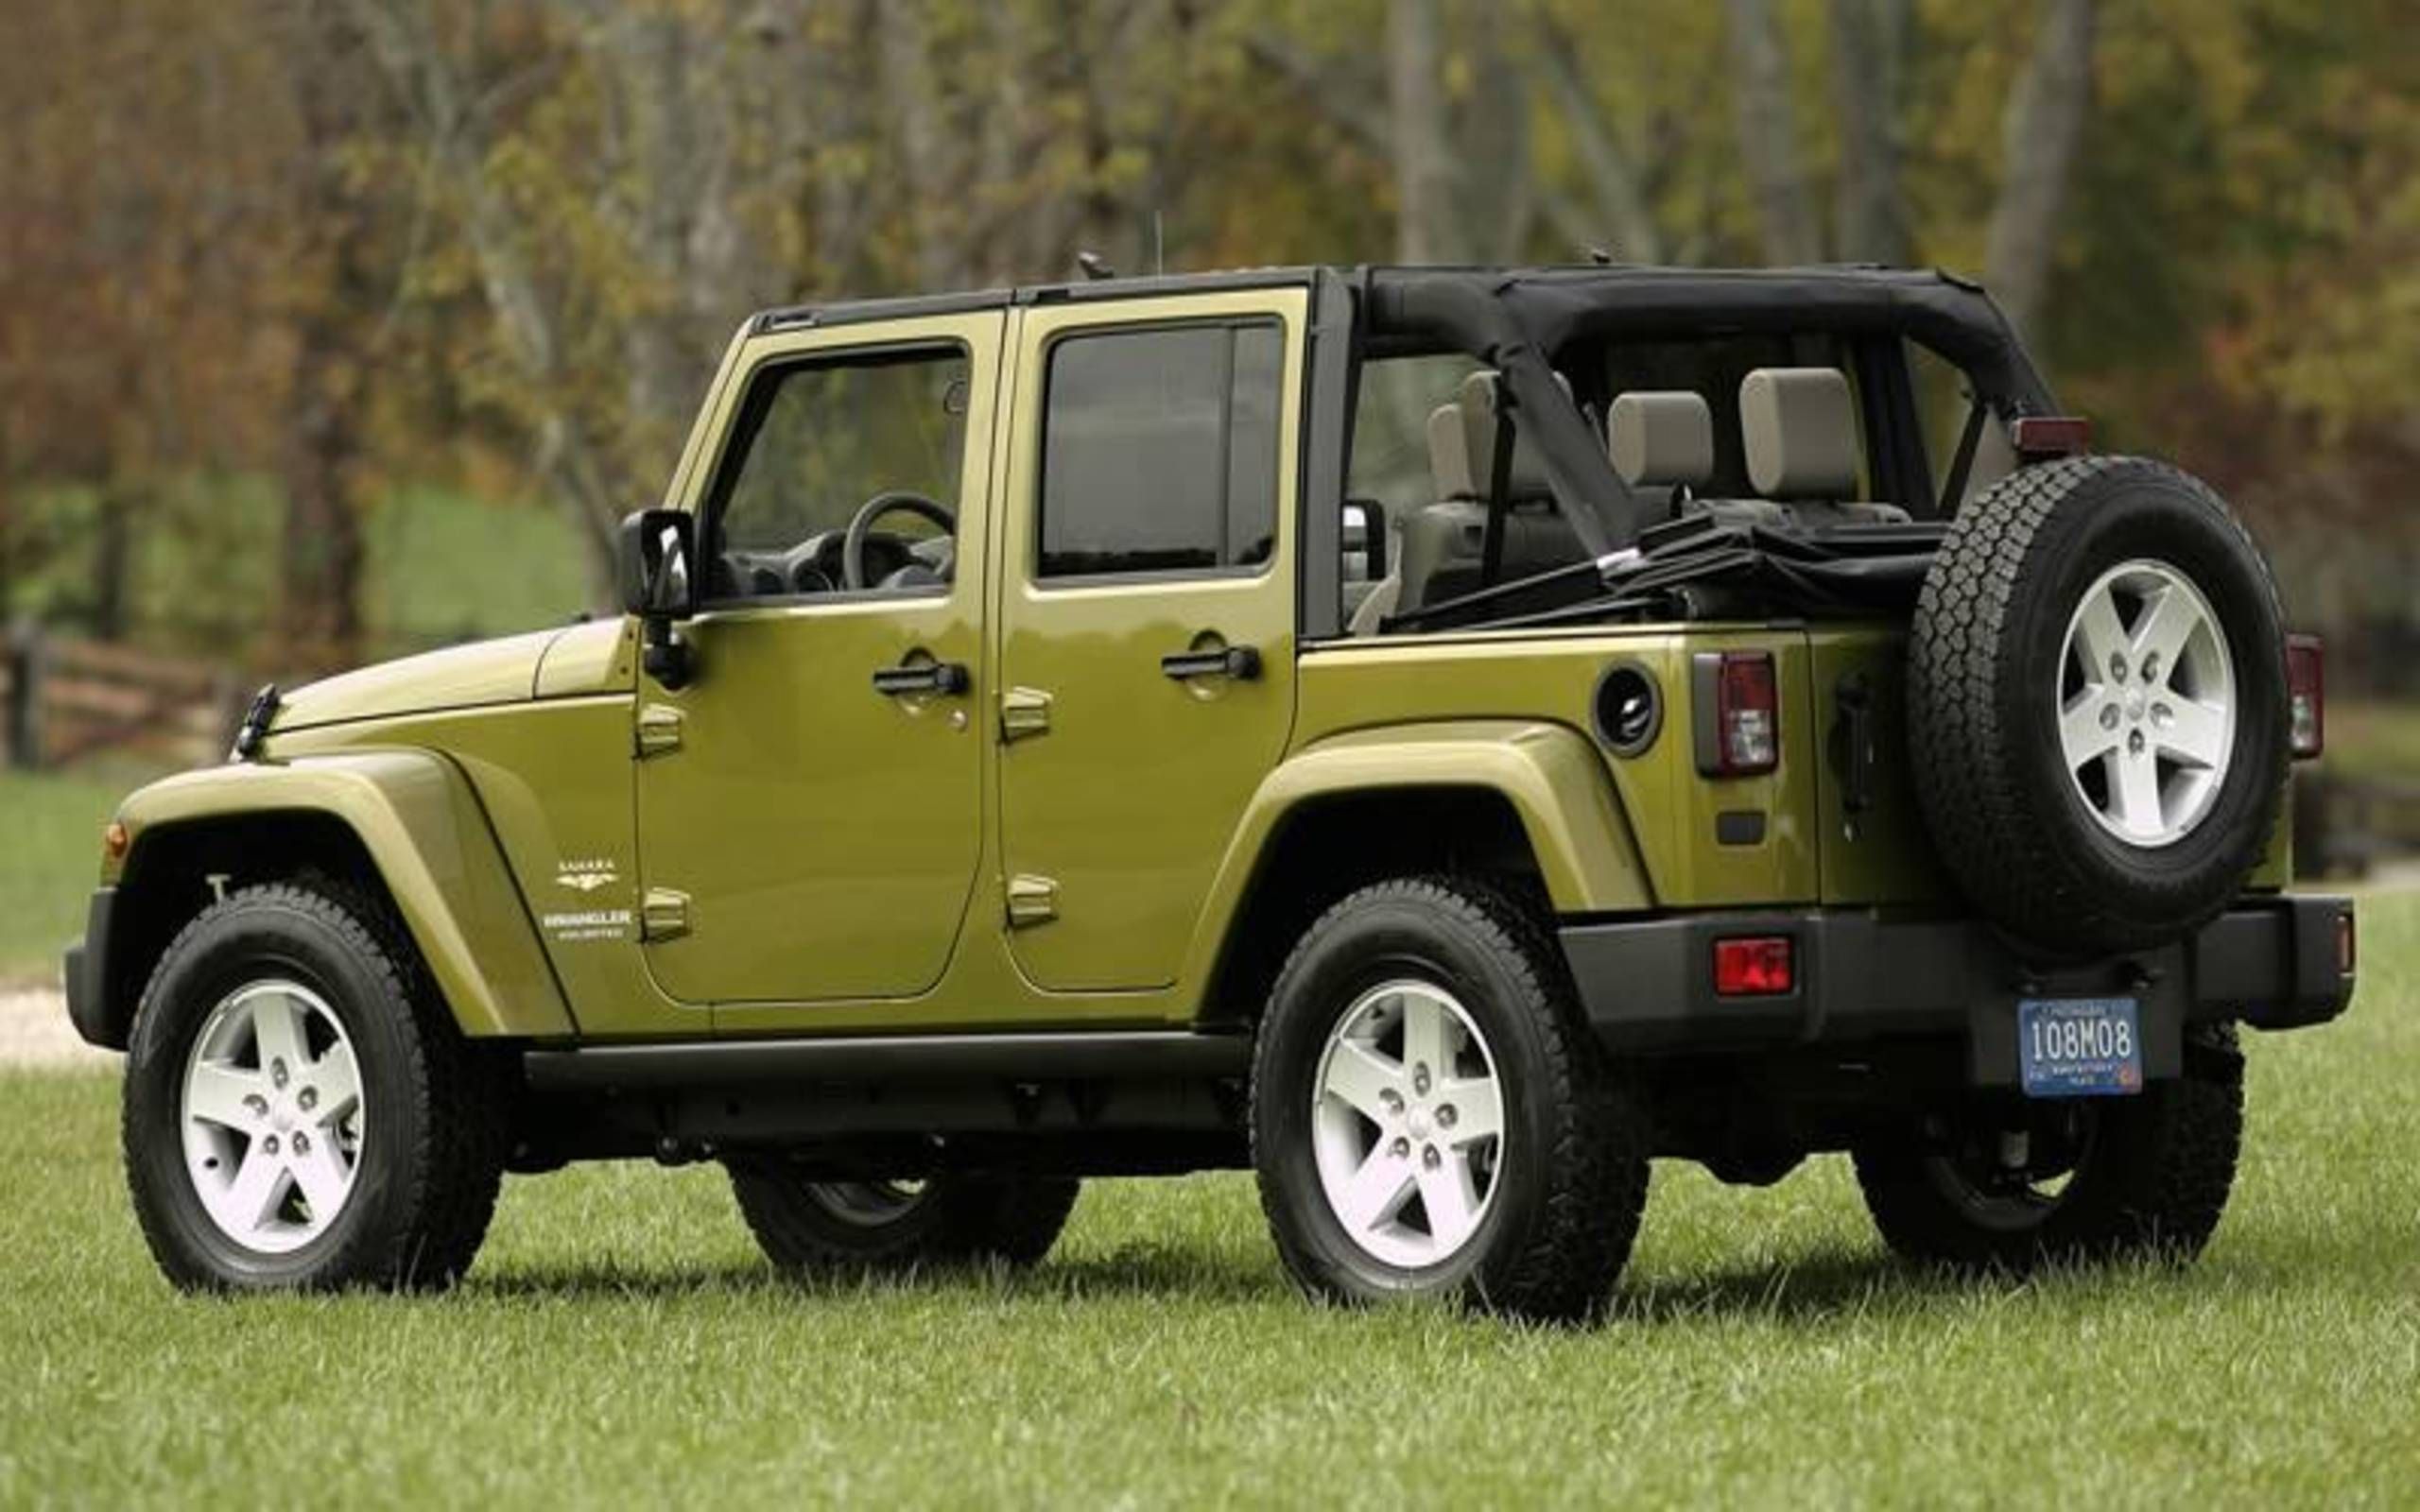 2007 Jeep Wrangler Unlimited Sahara: More Mature